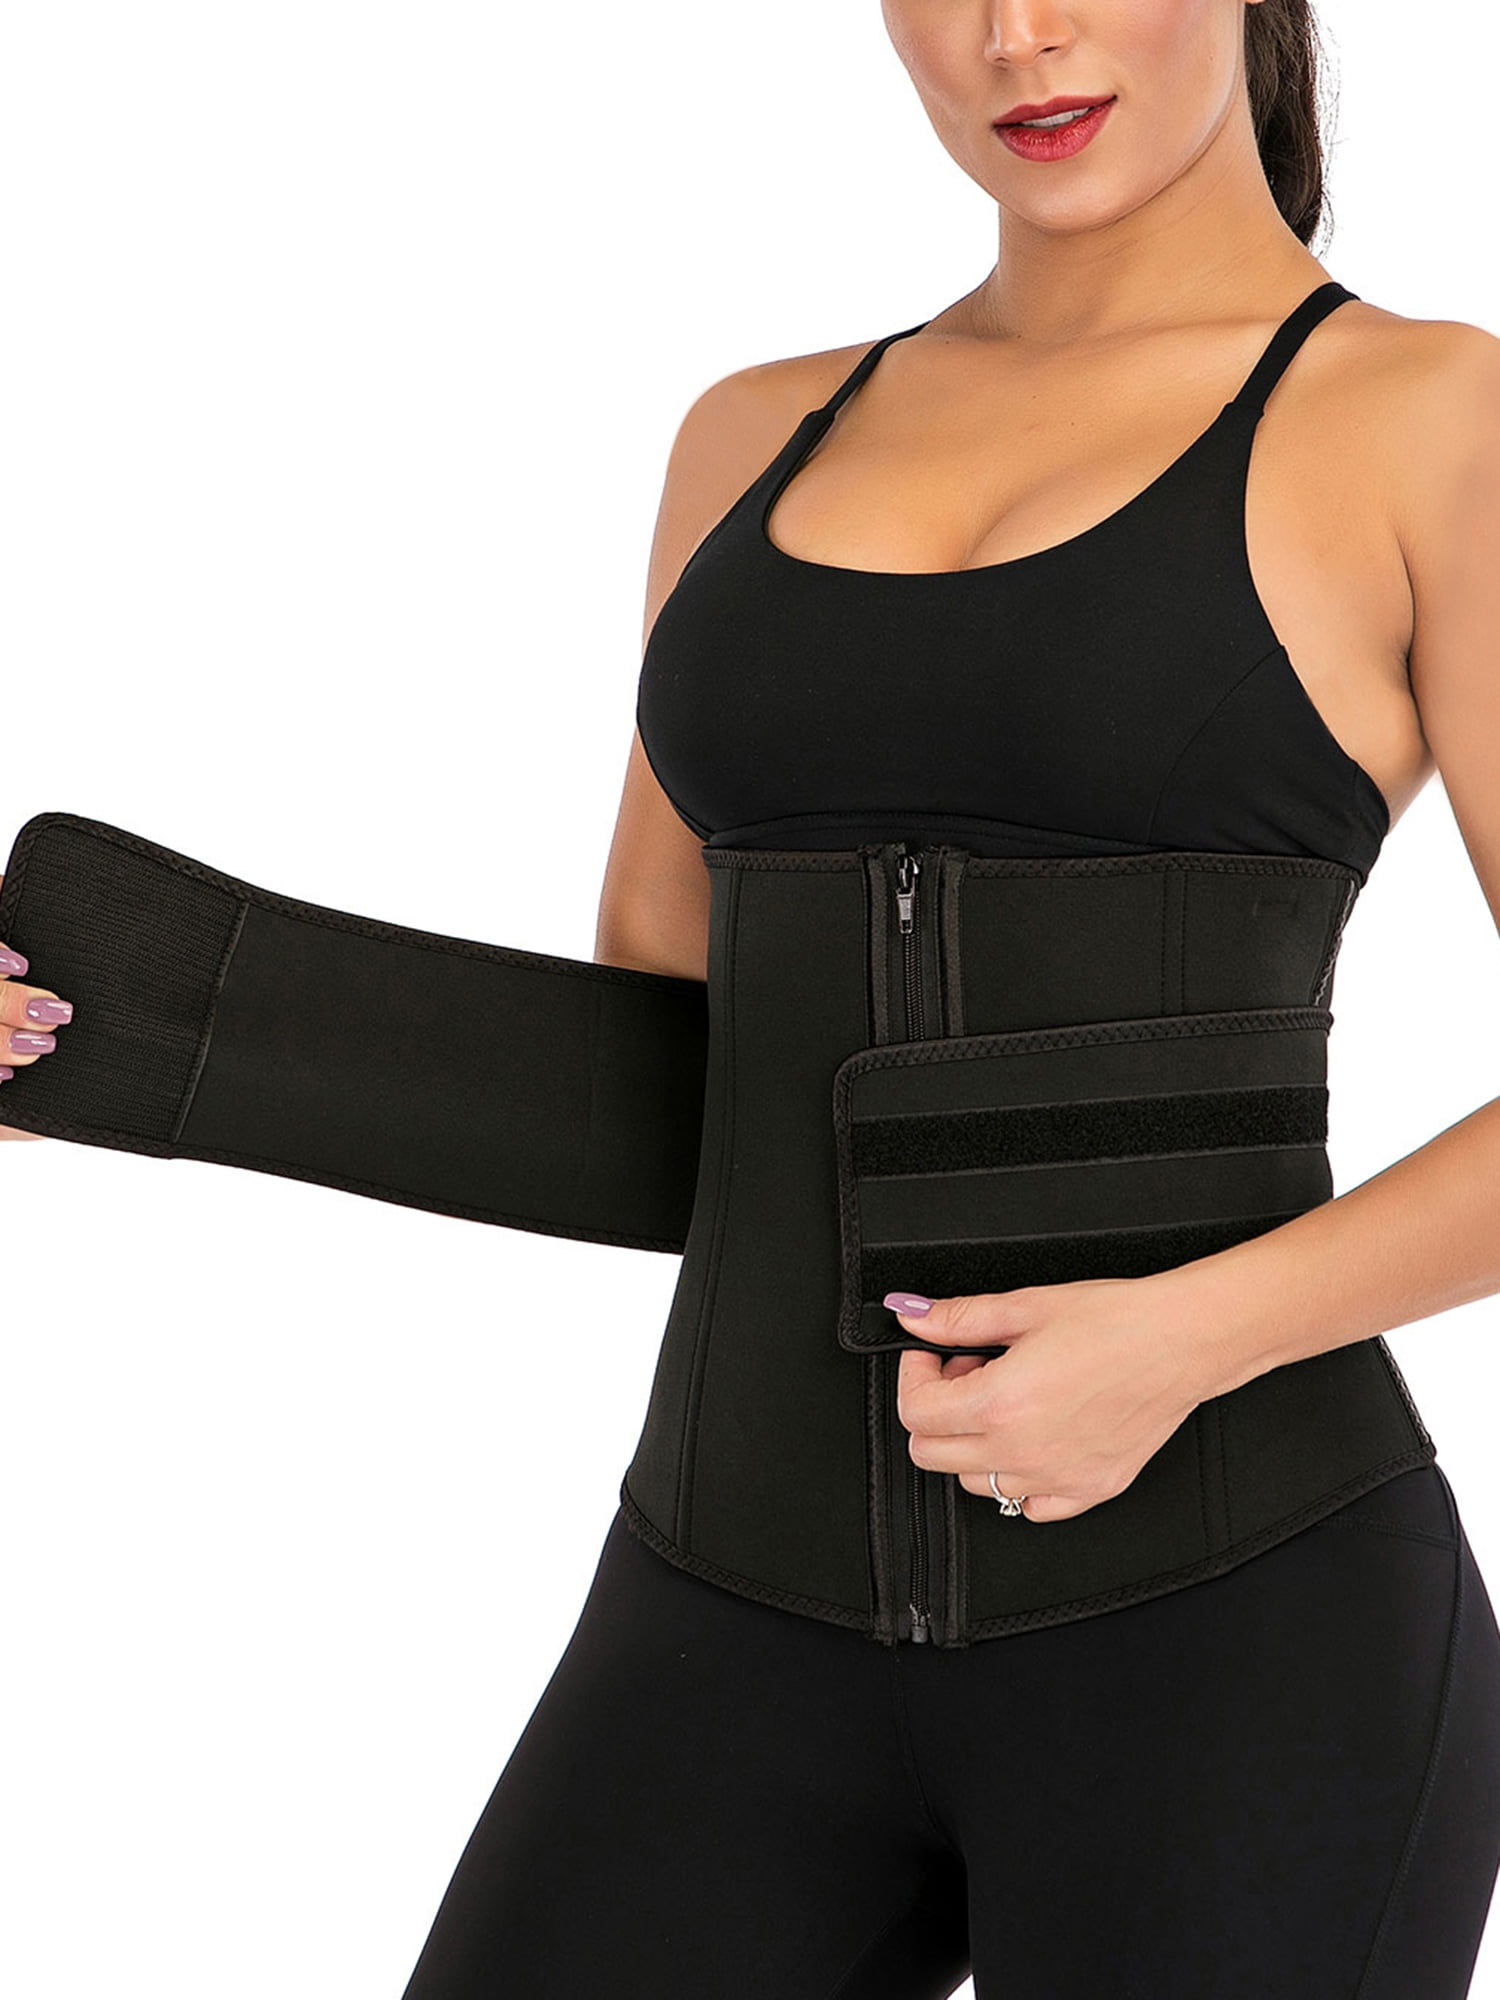 Women Waist Trainer Body Shaper Neoprene Sweat Sauna Belt Slimmer Tummy Control 